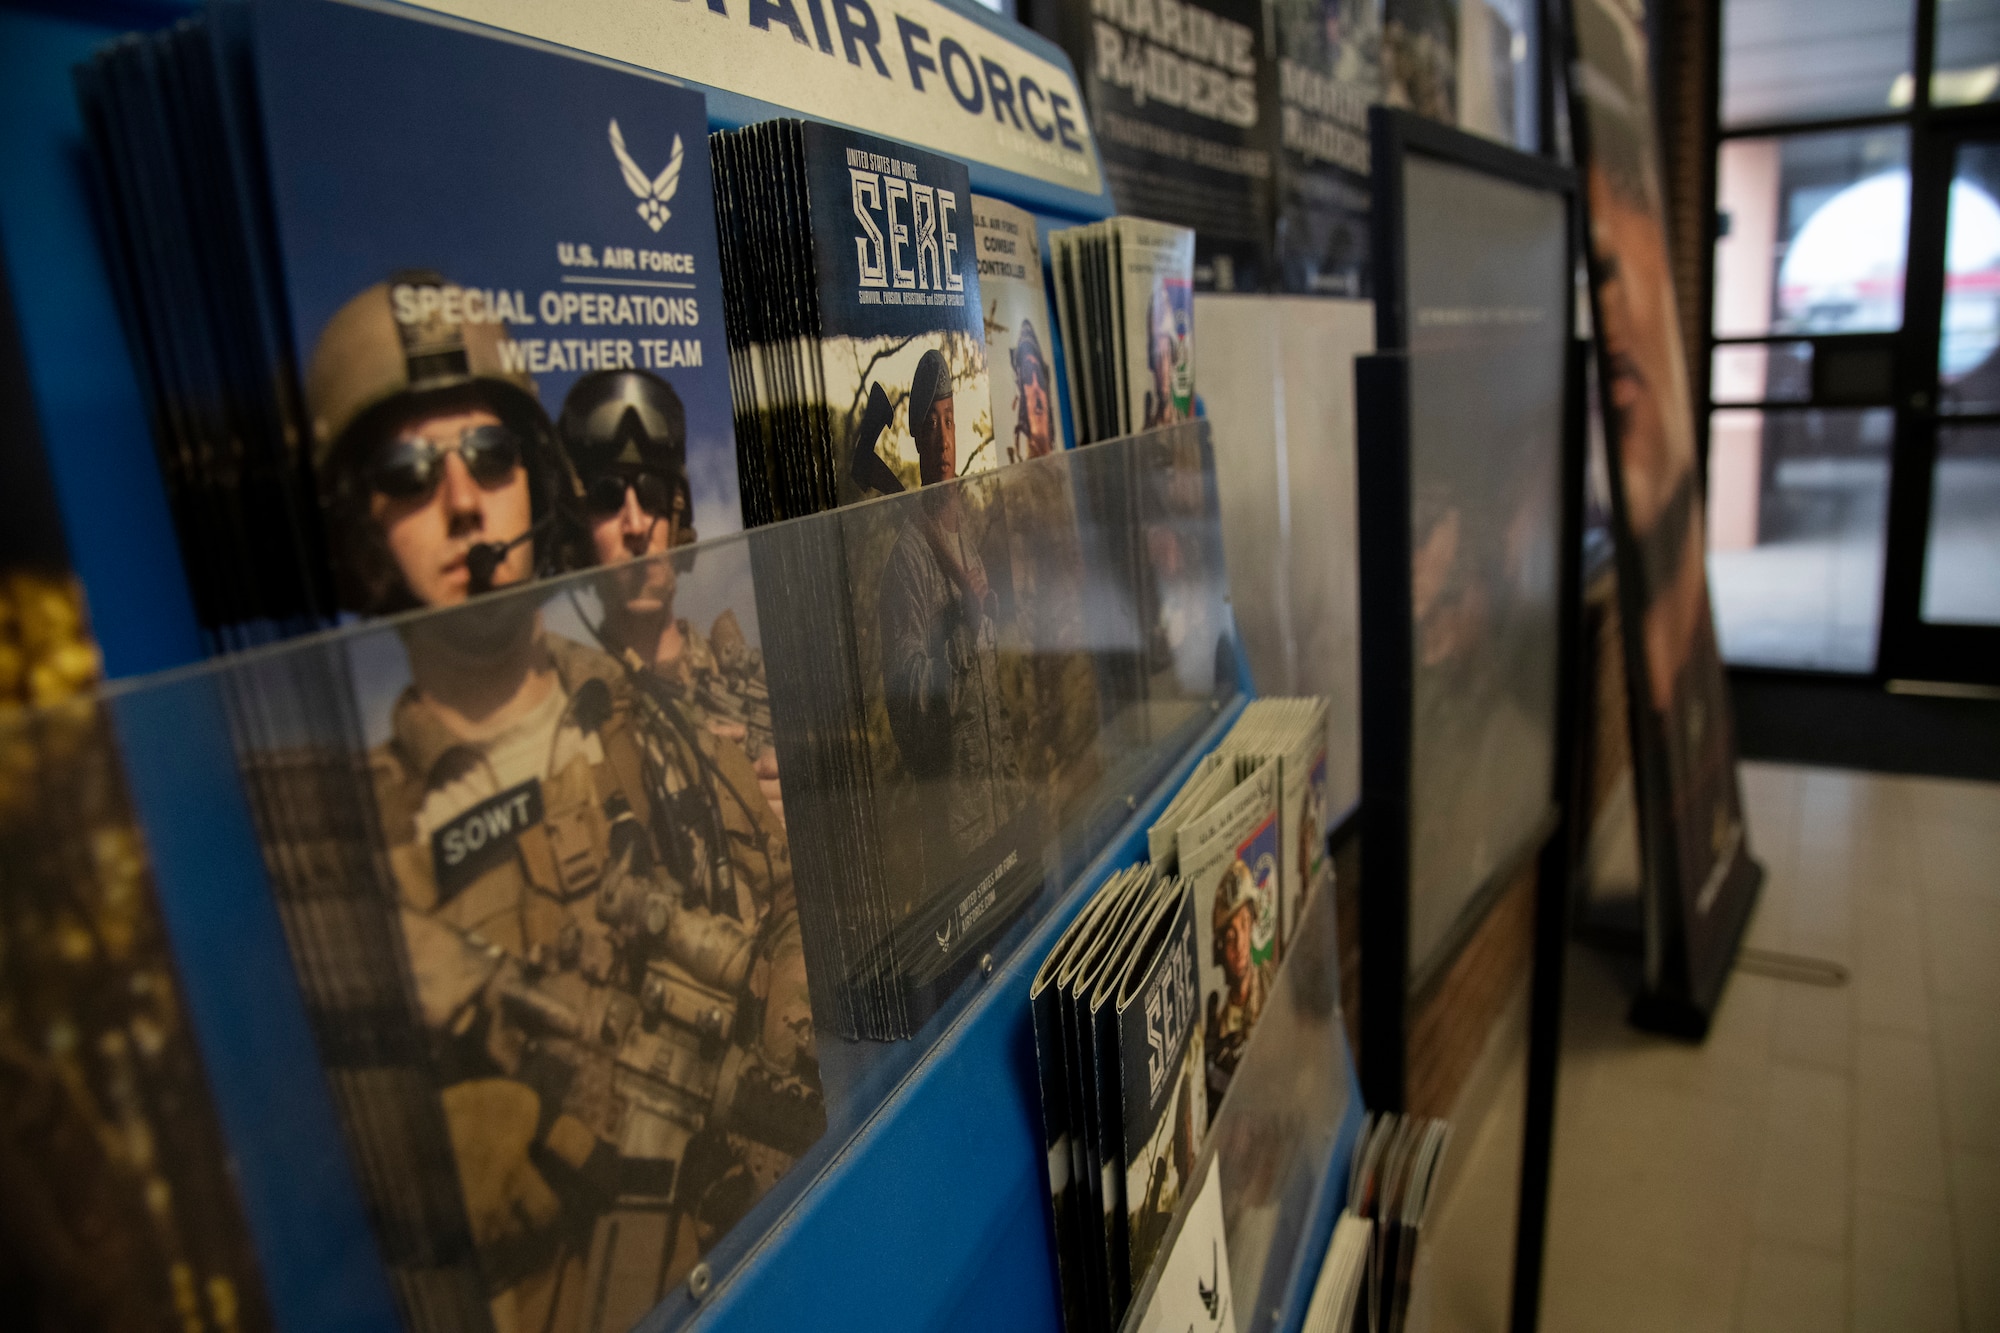 U.S. Air Force literature sits upon rack